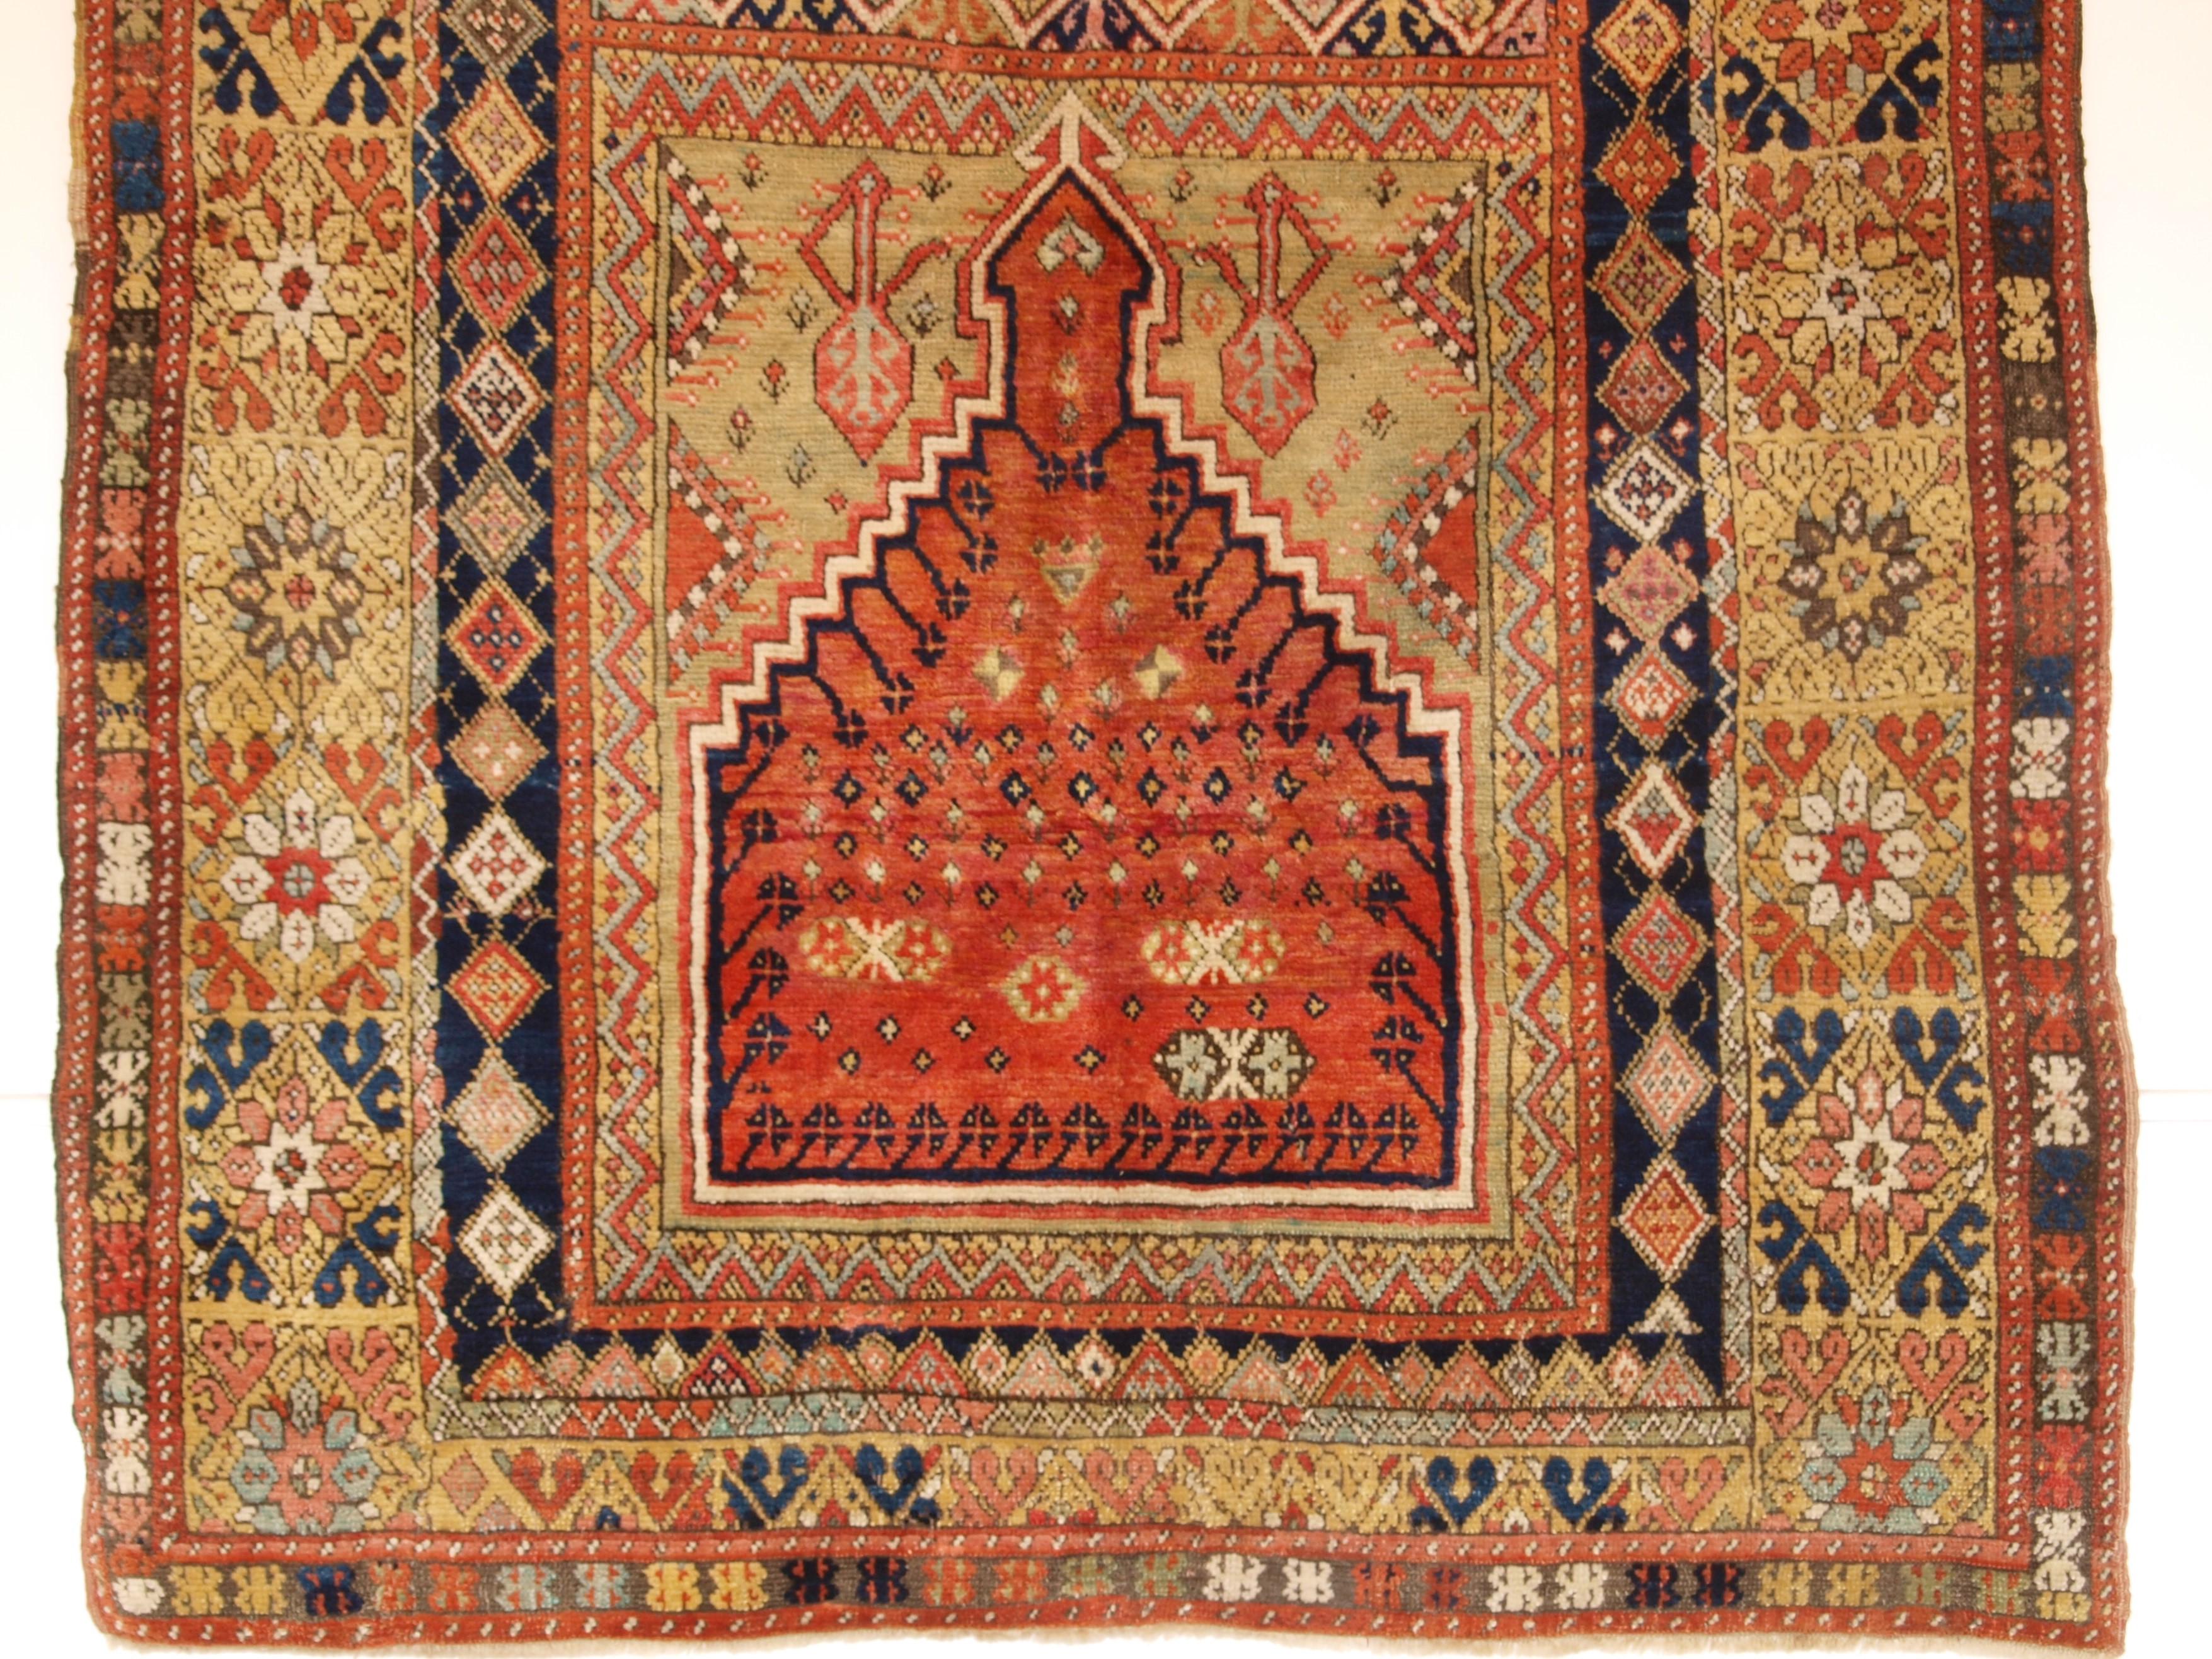 Wool Antique Turkish Mujur Prayer Rug of Classic Design, Mid 19th Century For Sale